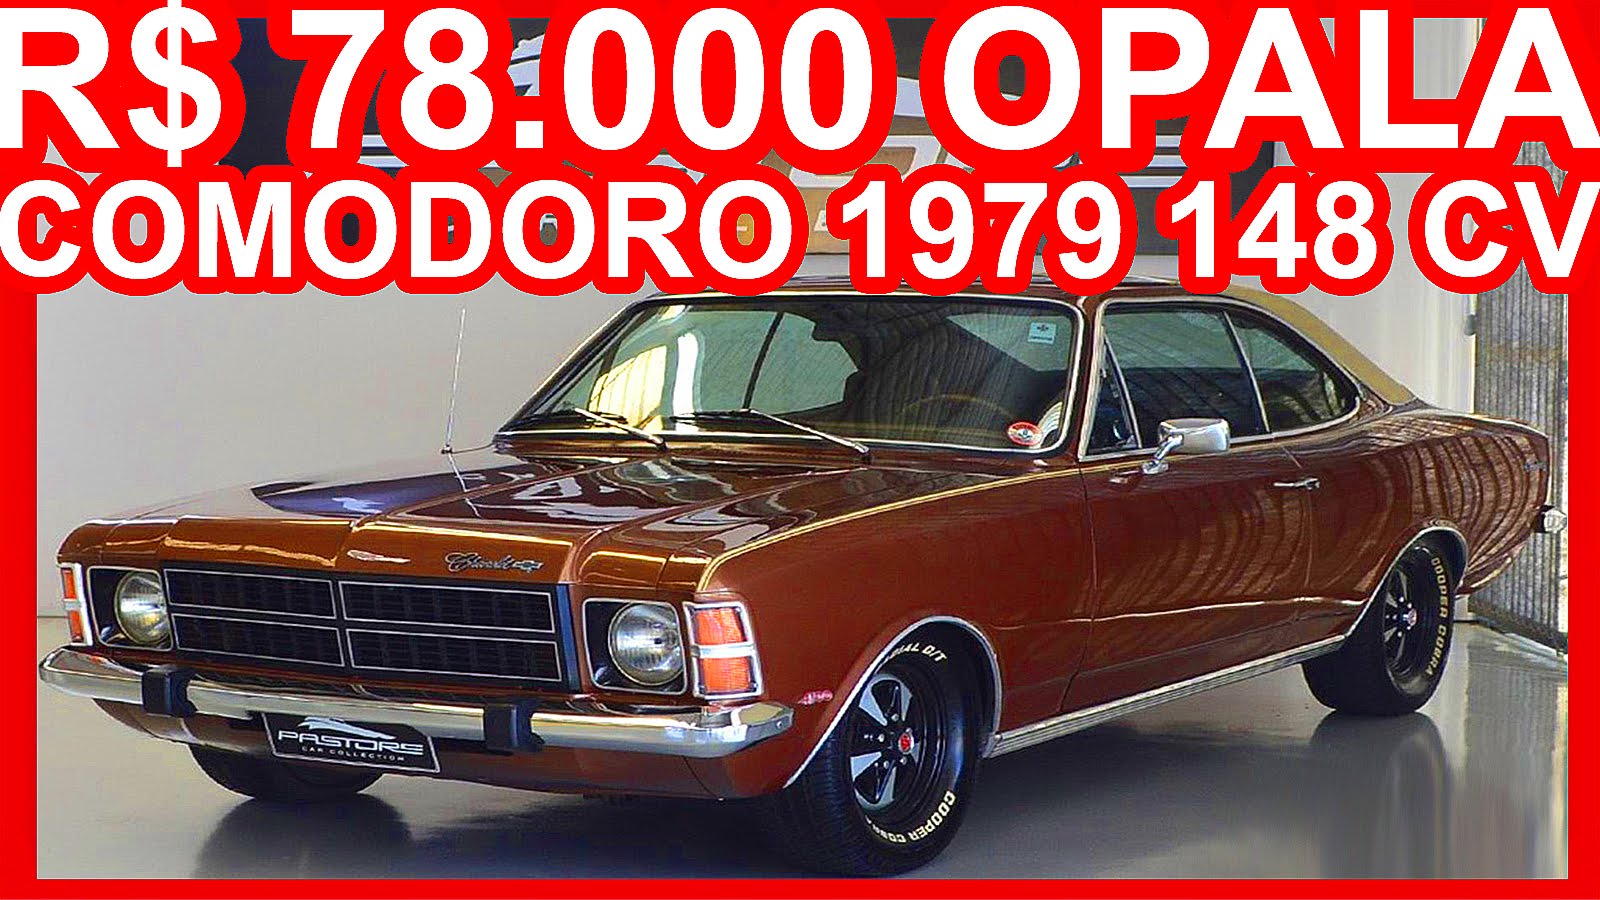 Chevrolet Opala Comodoro #3